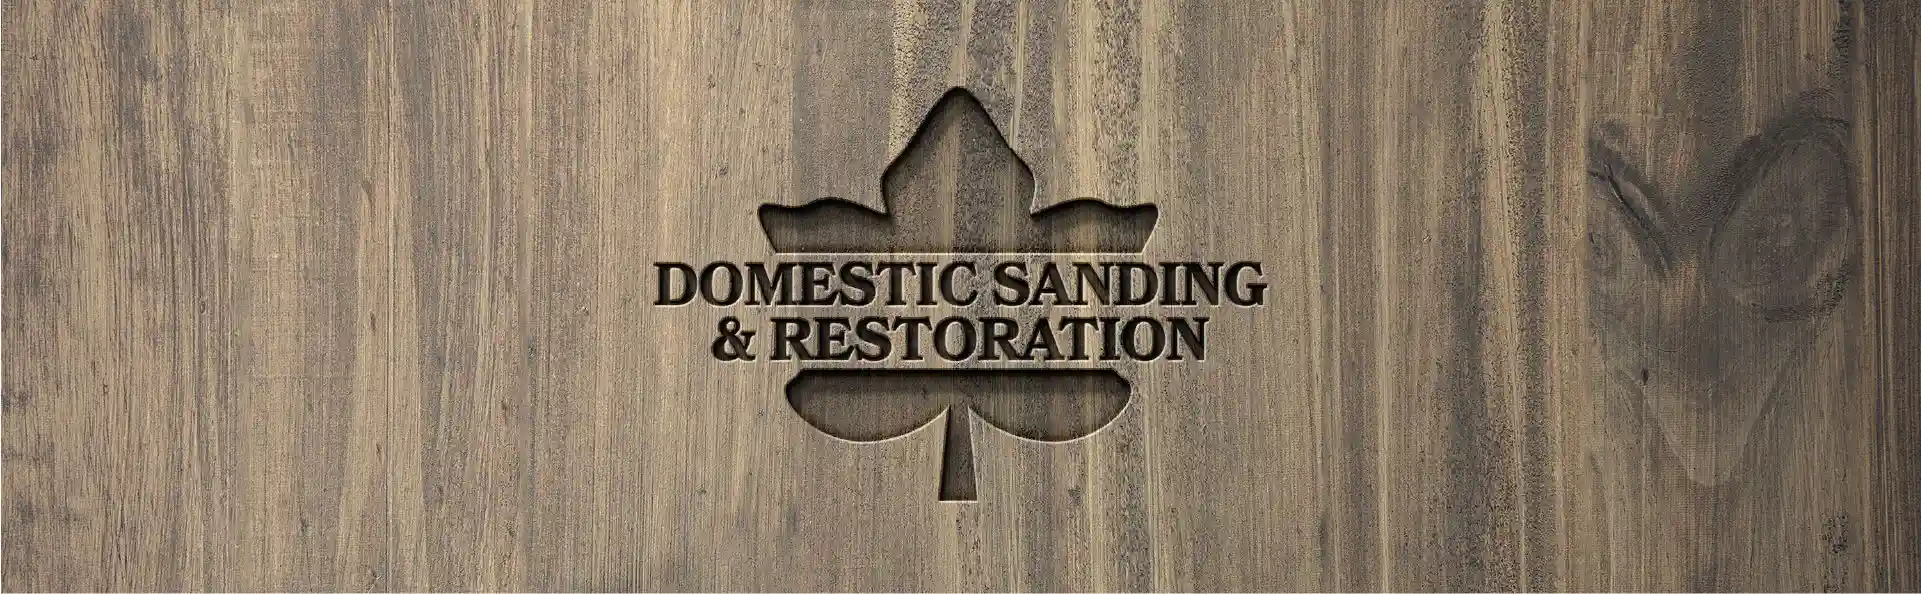 Domestic Sanding & Restoration logo